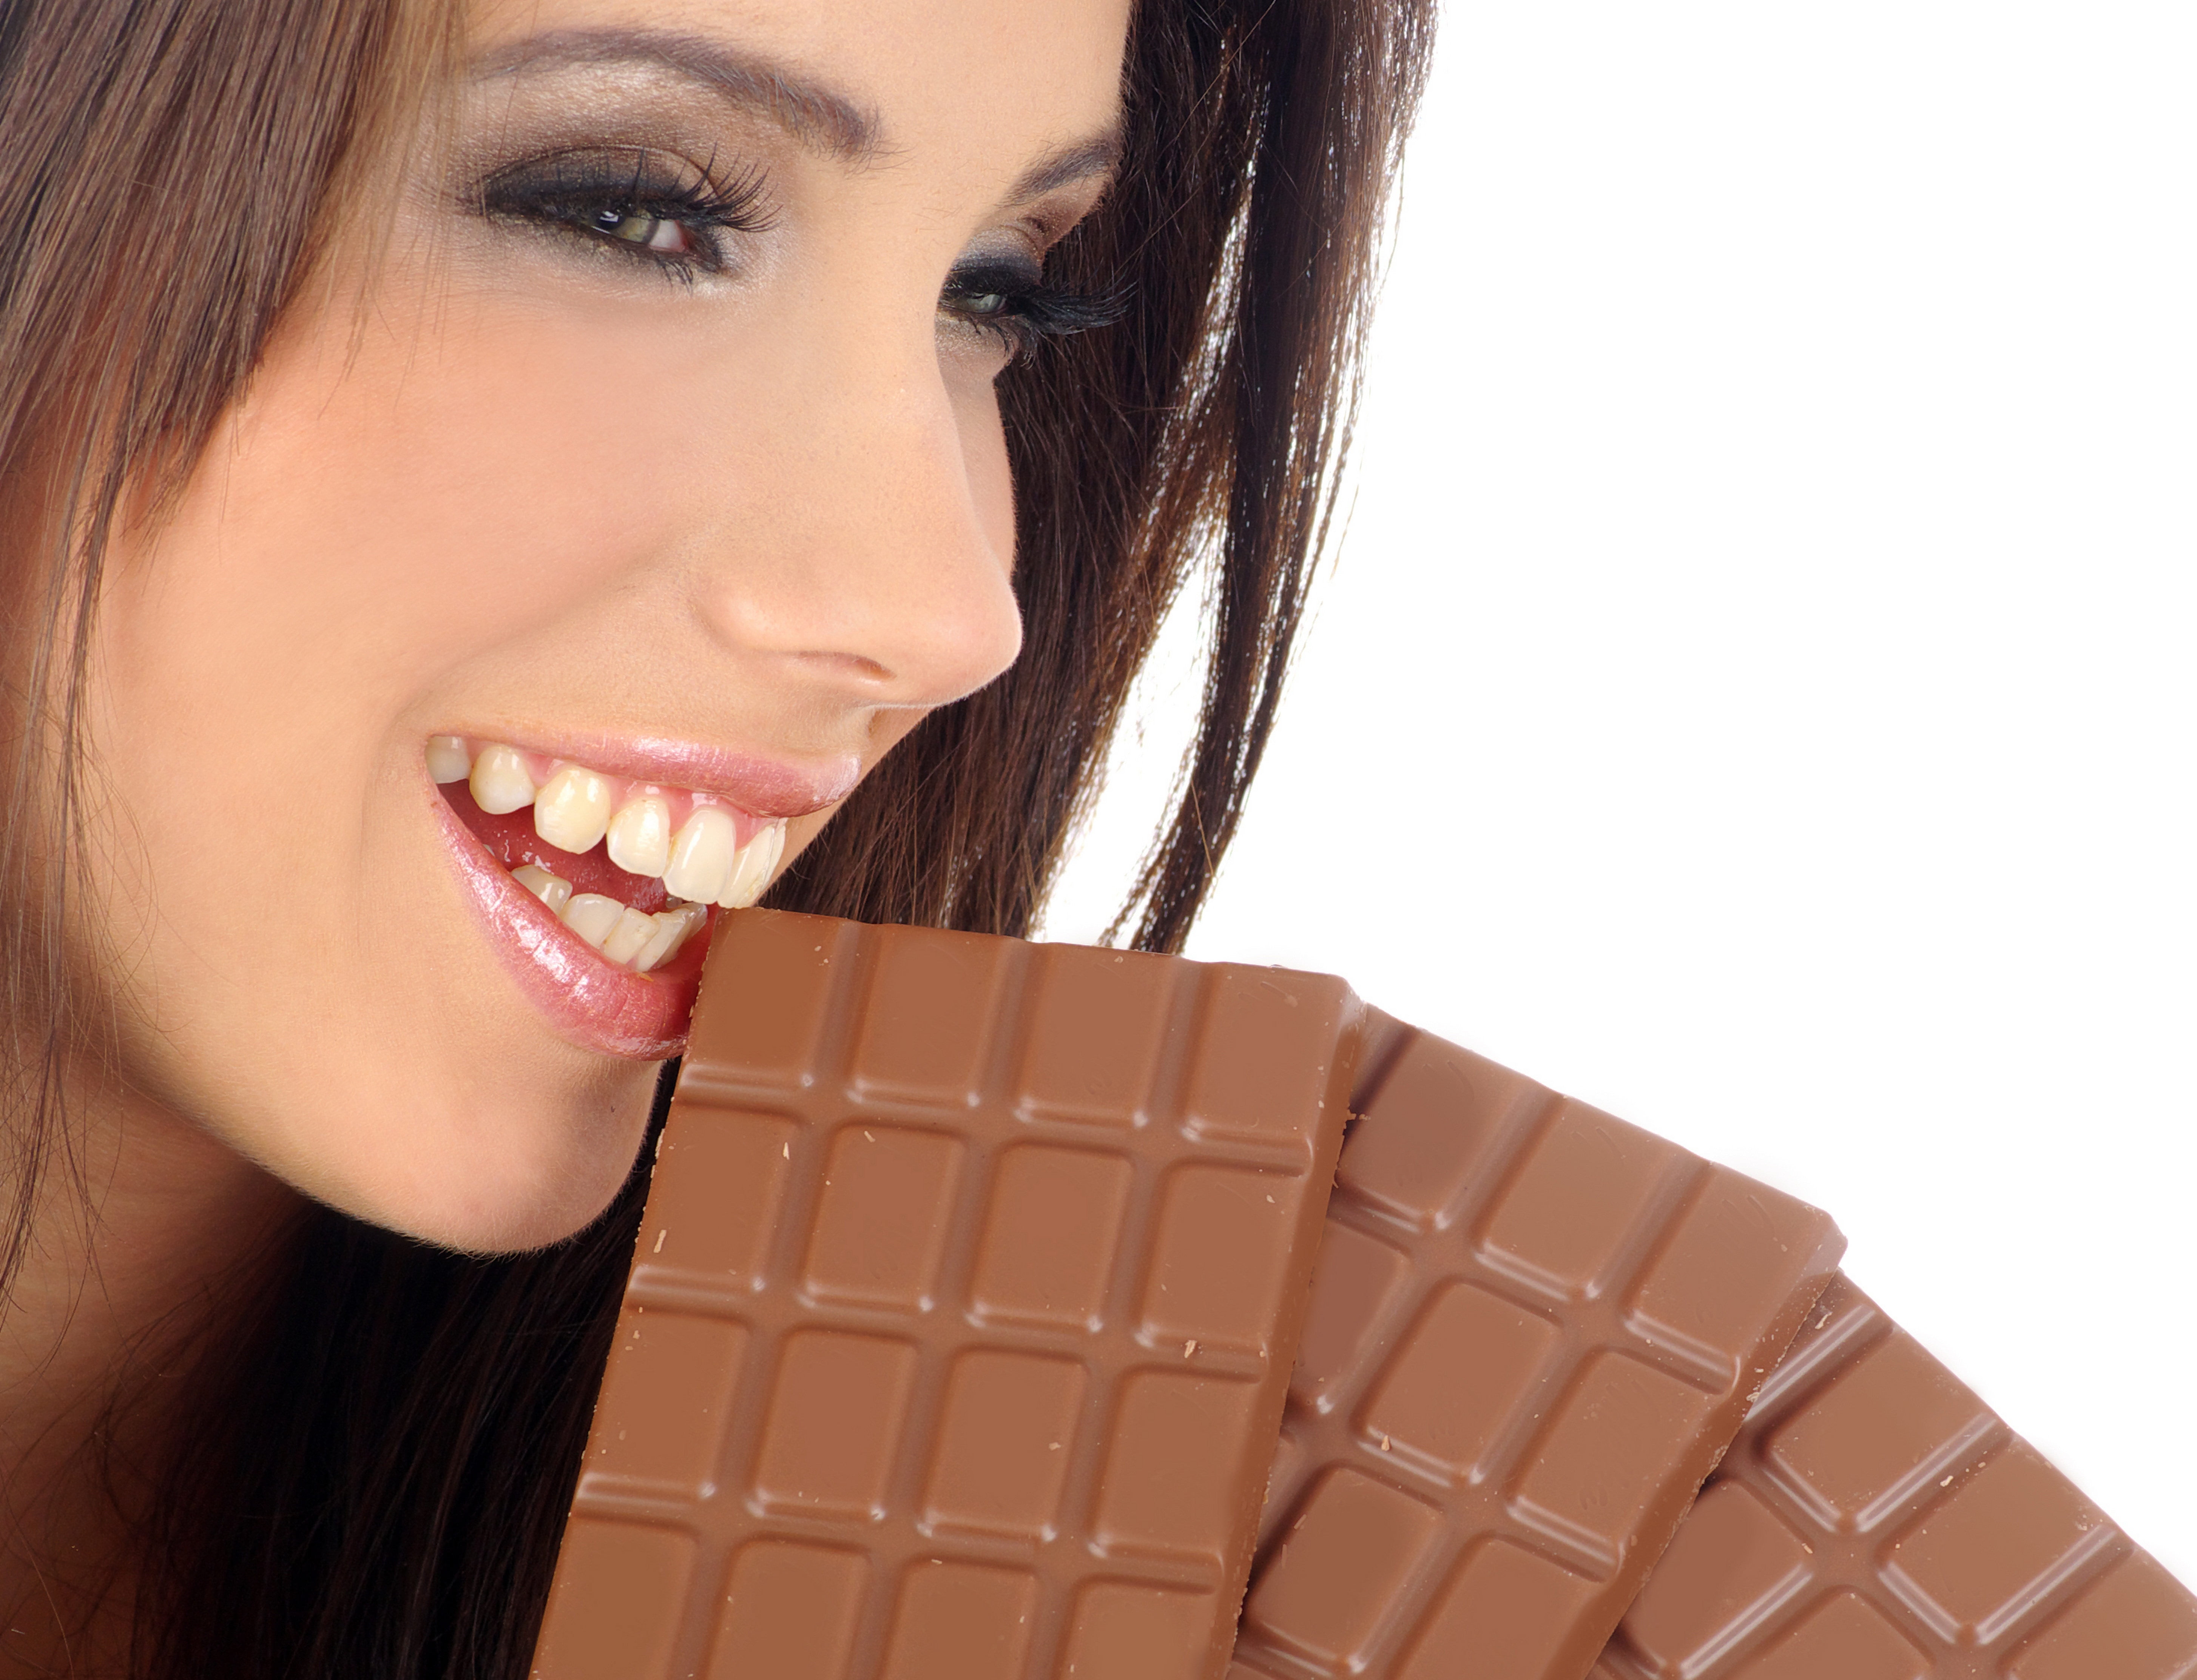 woman biting a chocolate bar photo